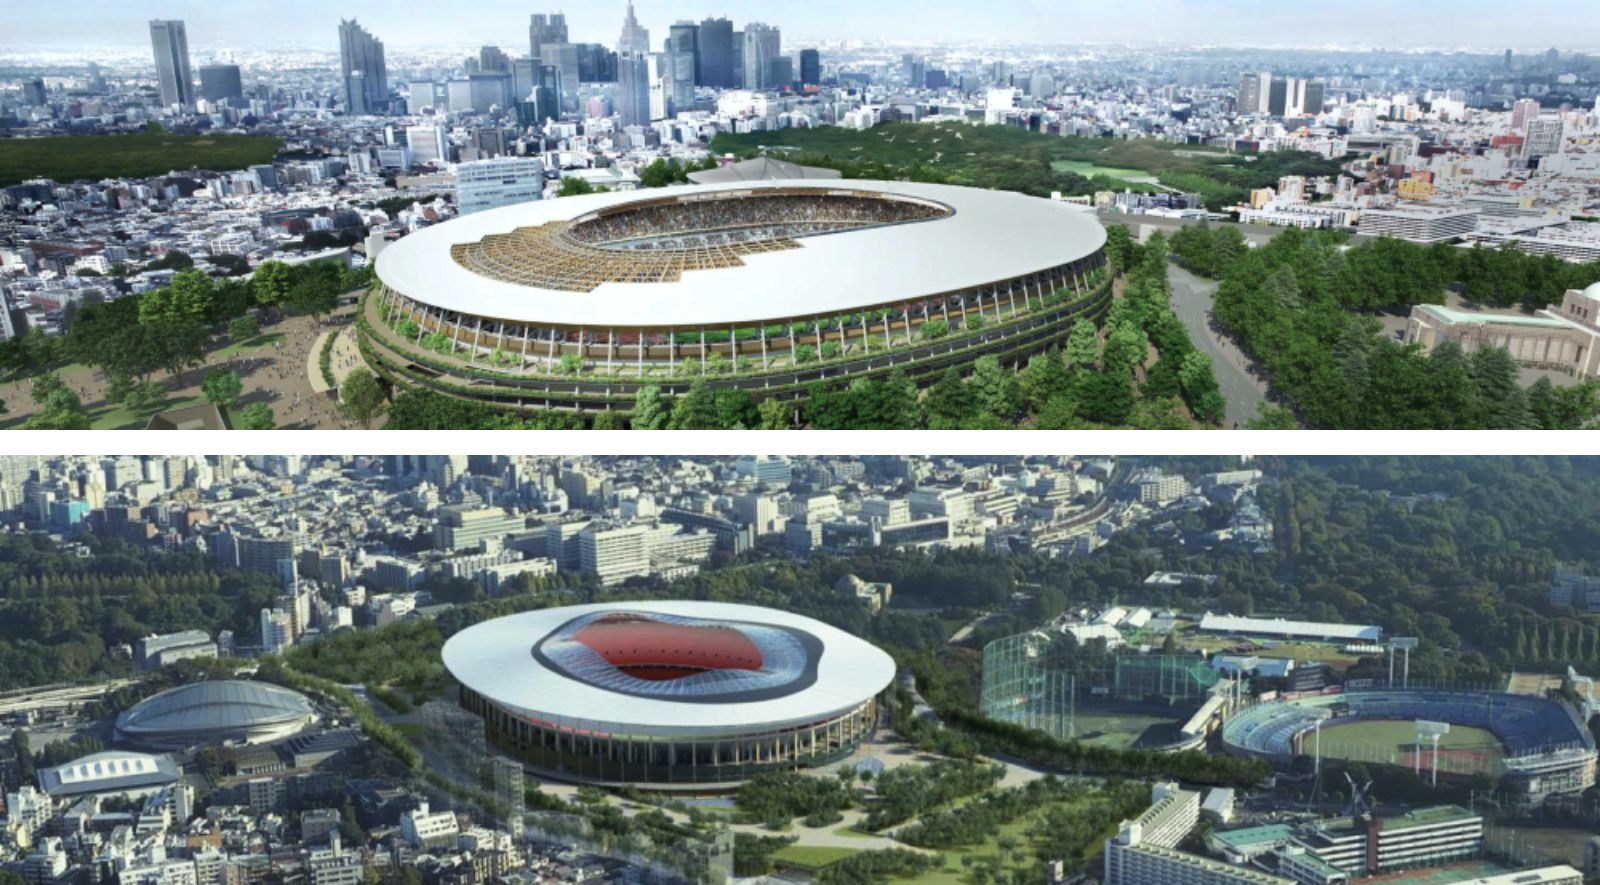 Two new Olympic stadium